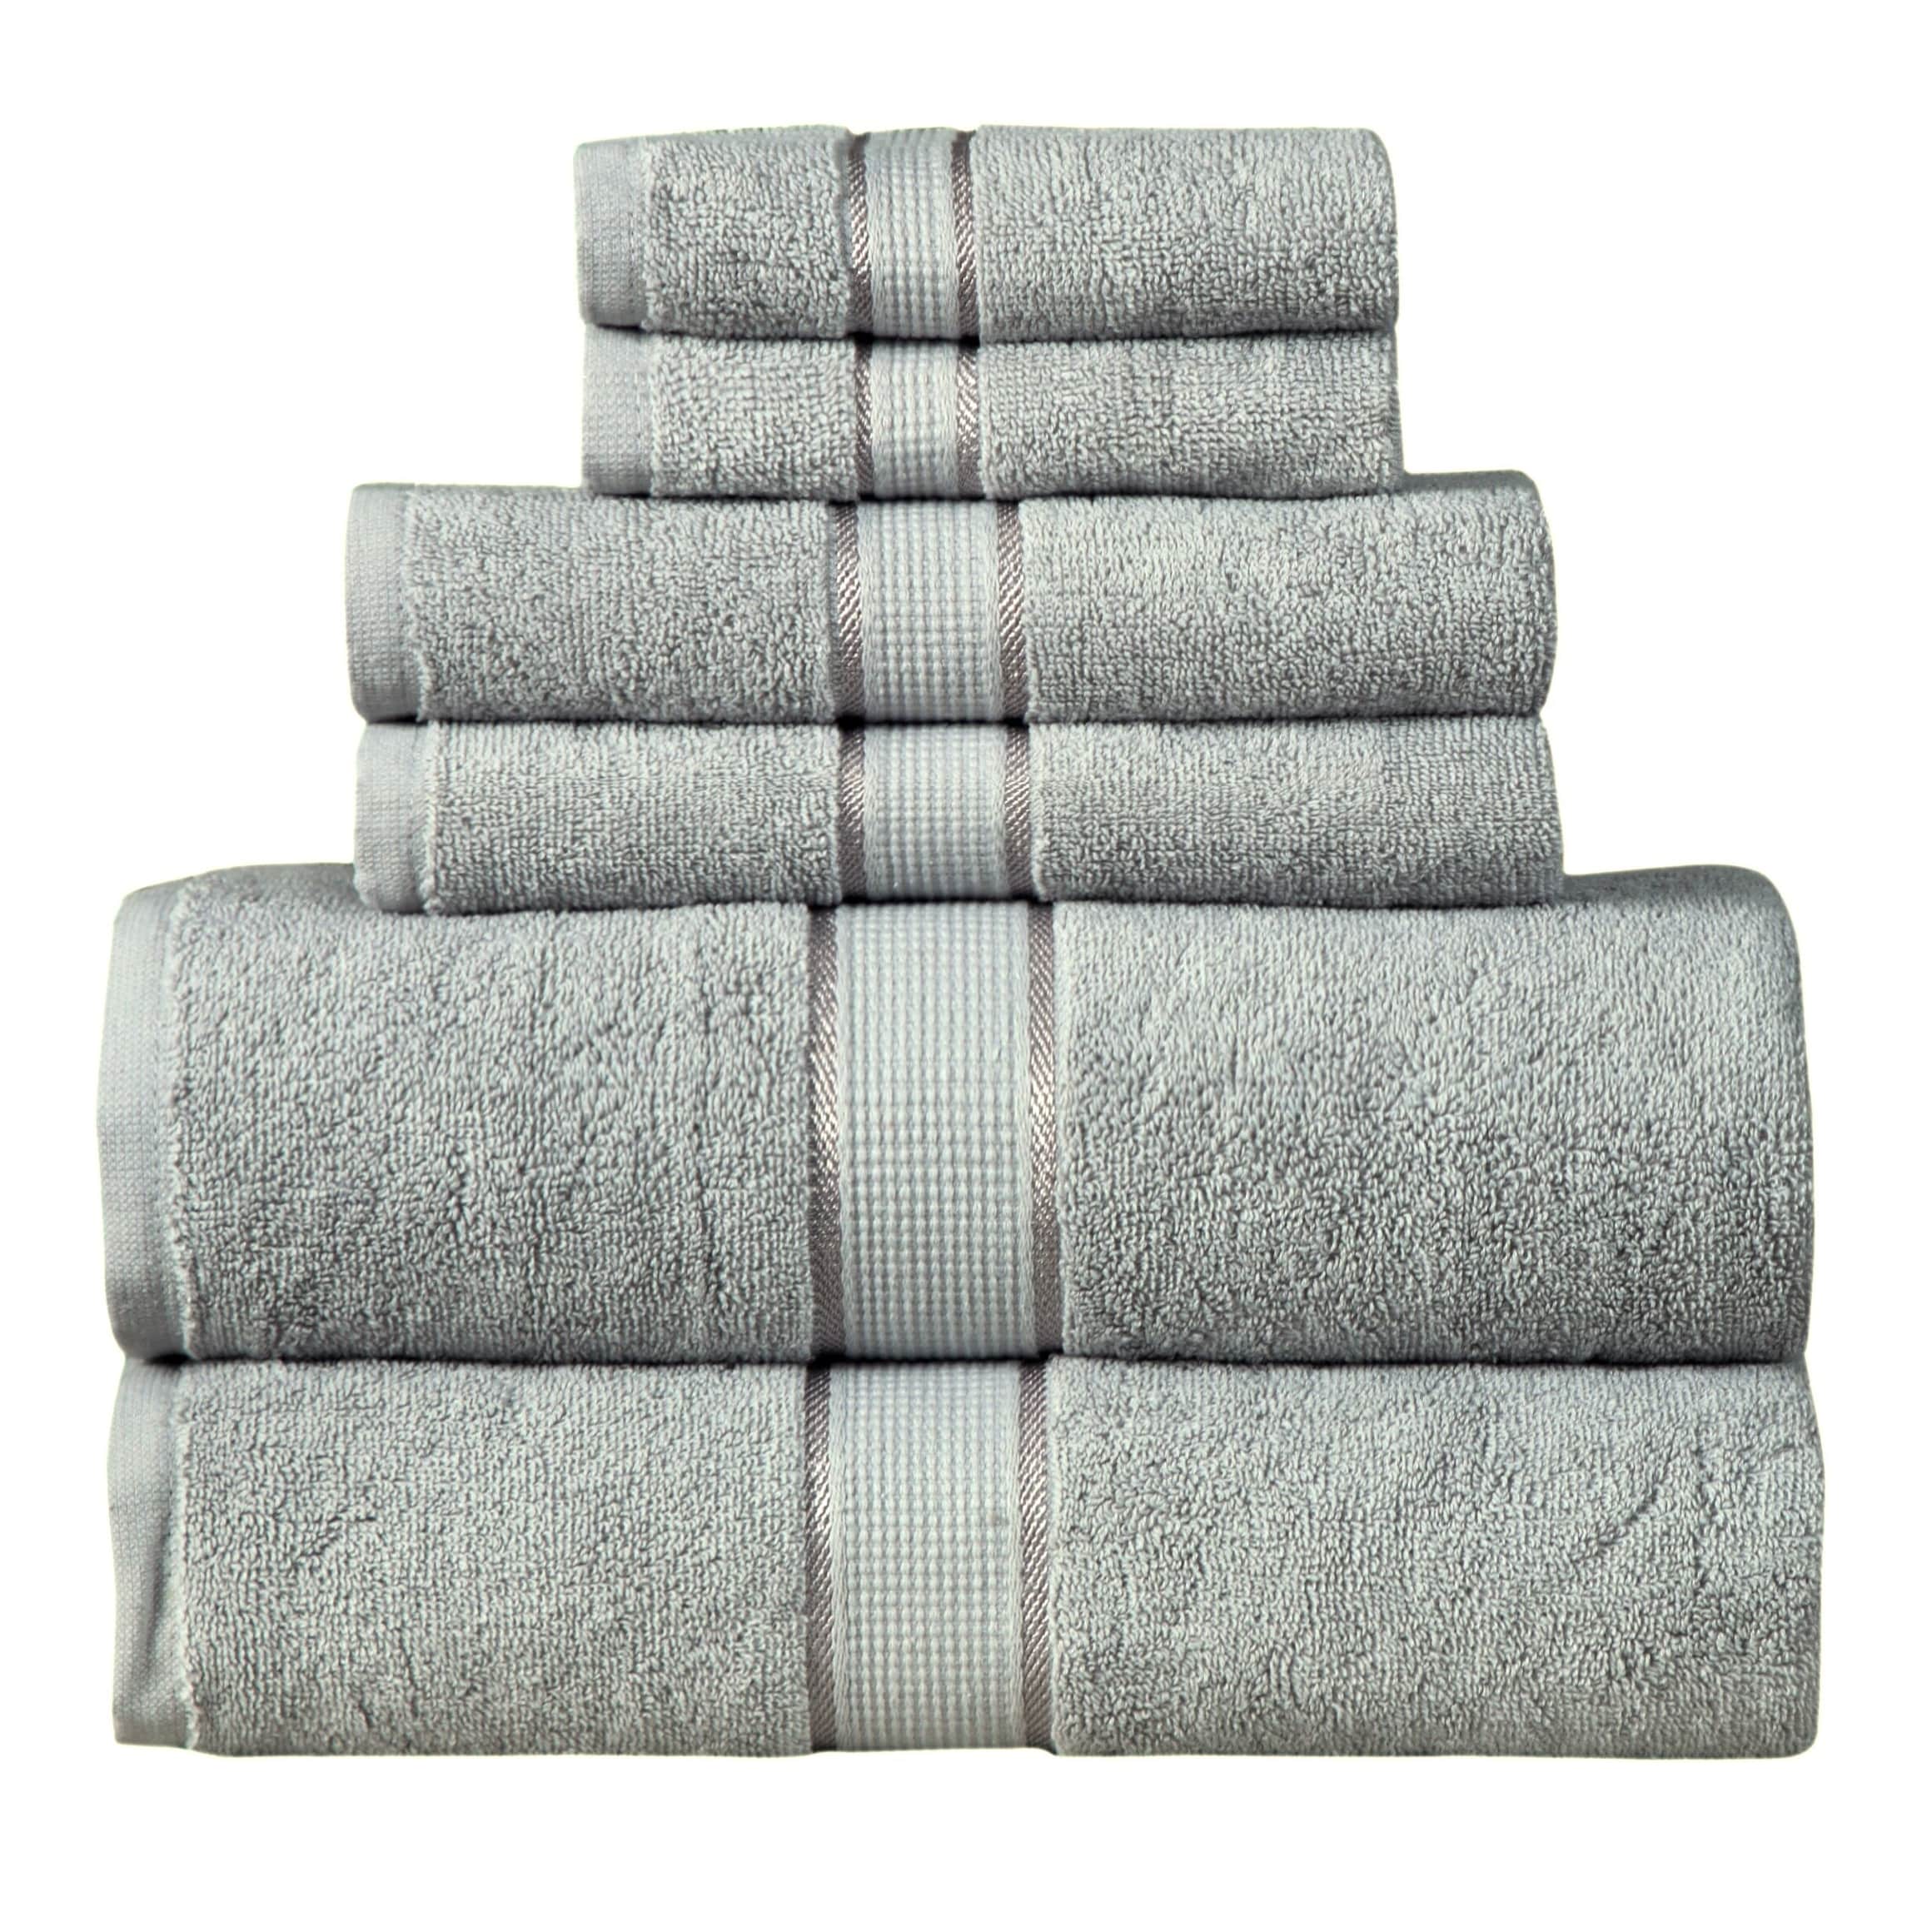 2 PC LUXURY TOWEL SET 100% COMBED COTTON SOFT DESIGN HAND BATH BATHROOM TOWELS 